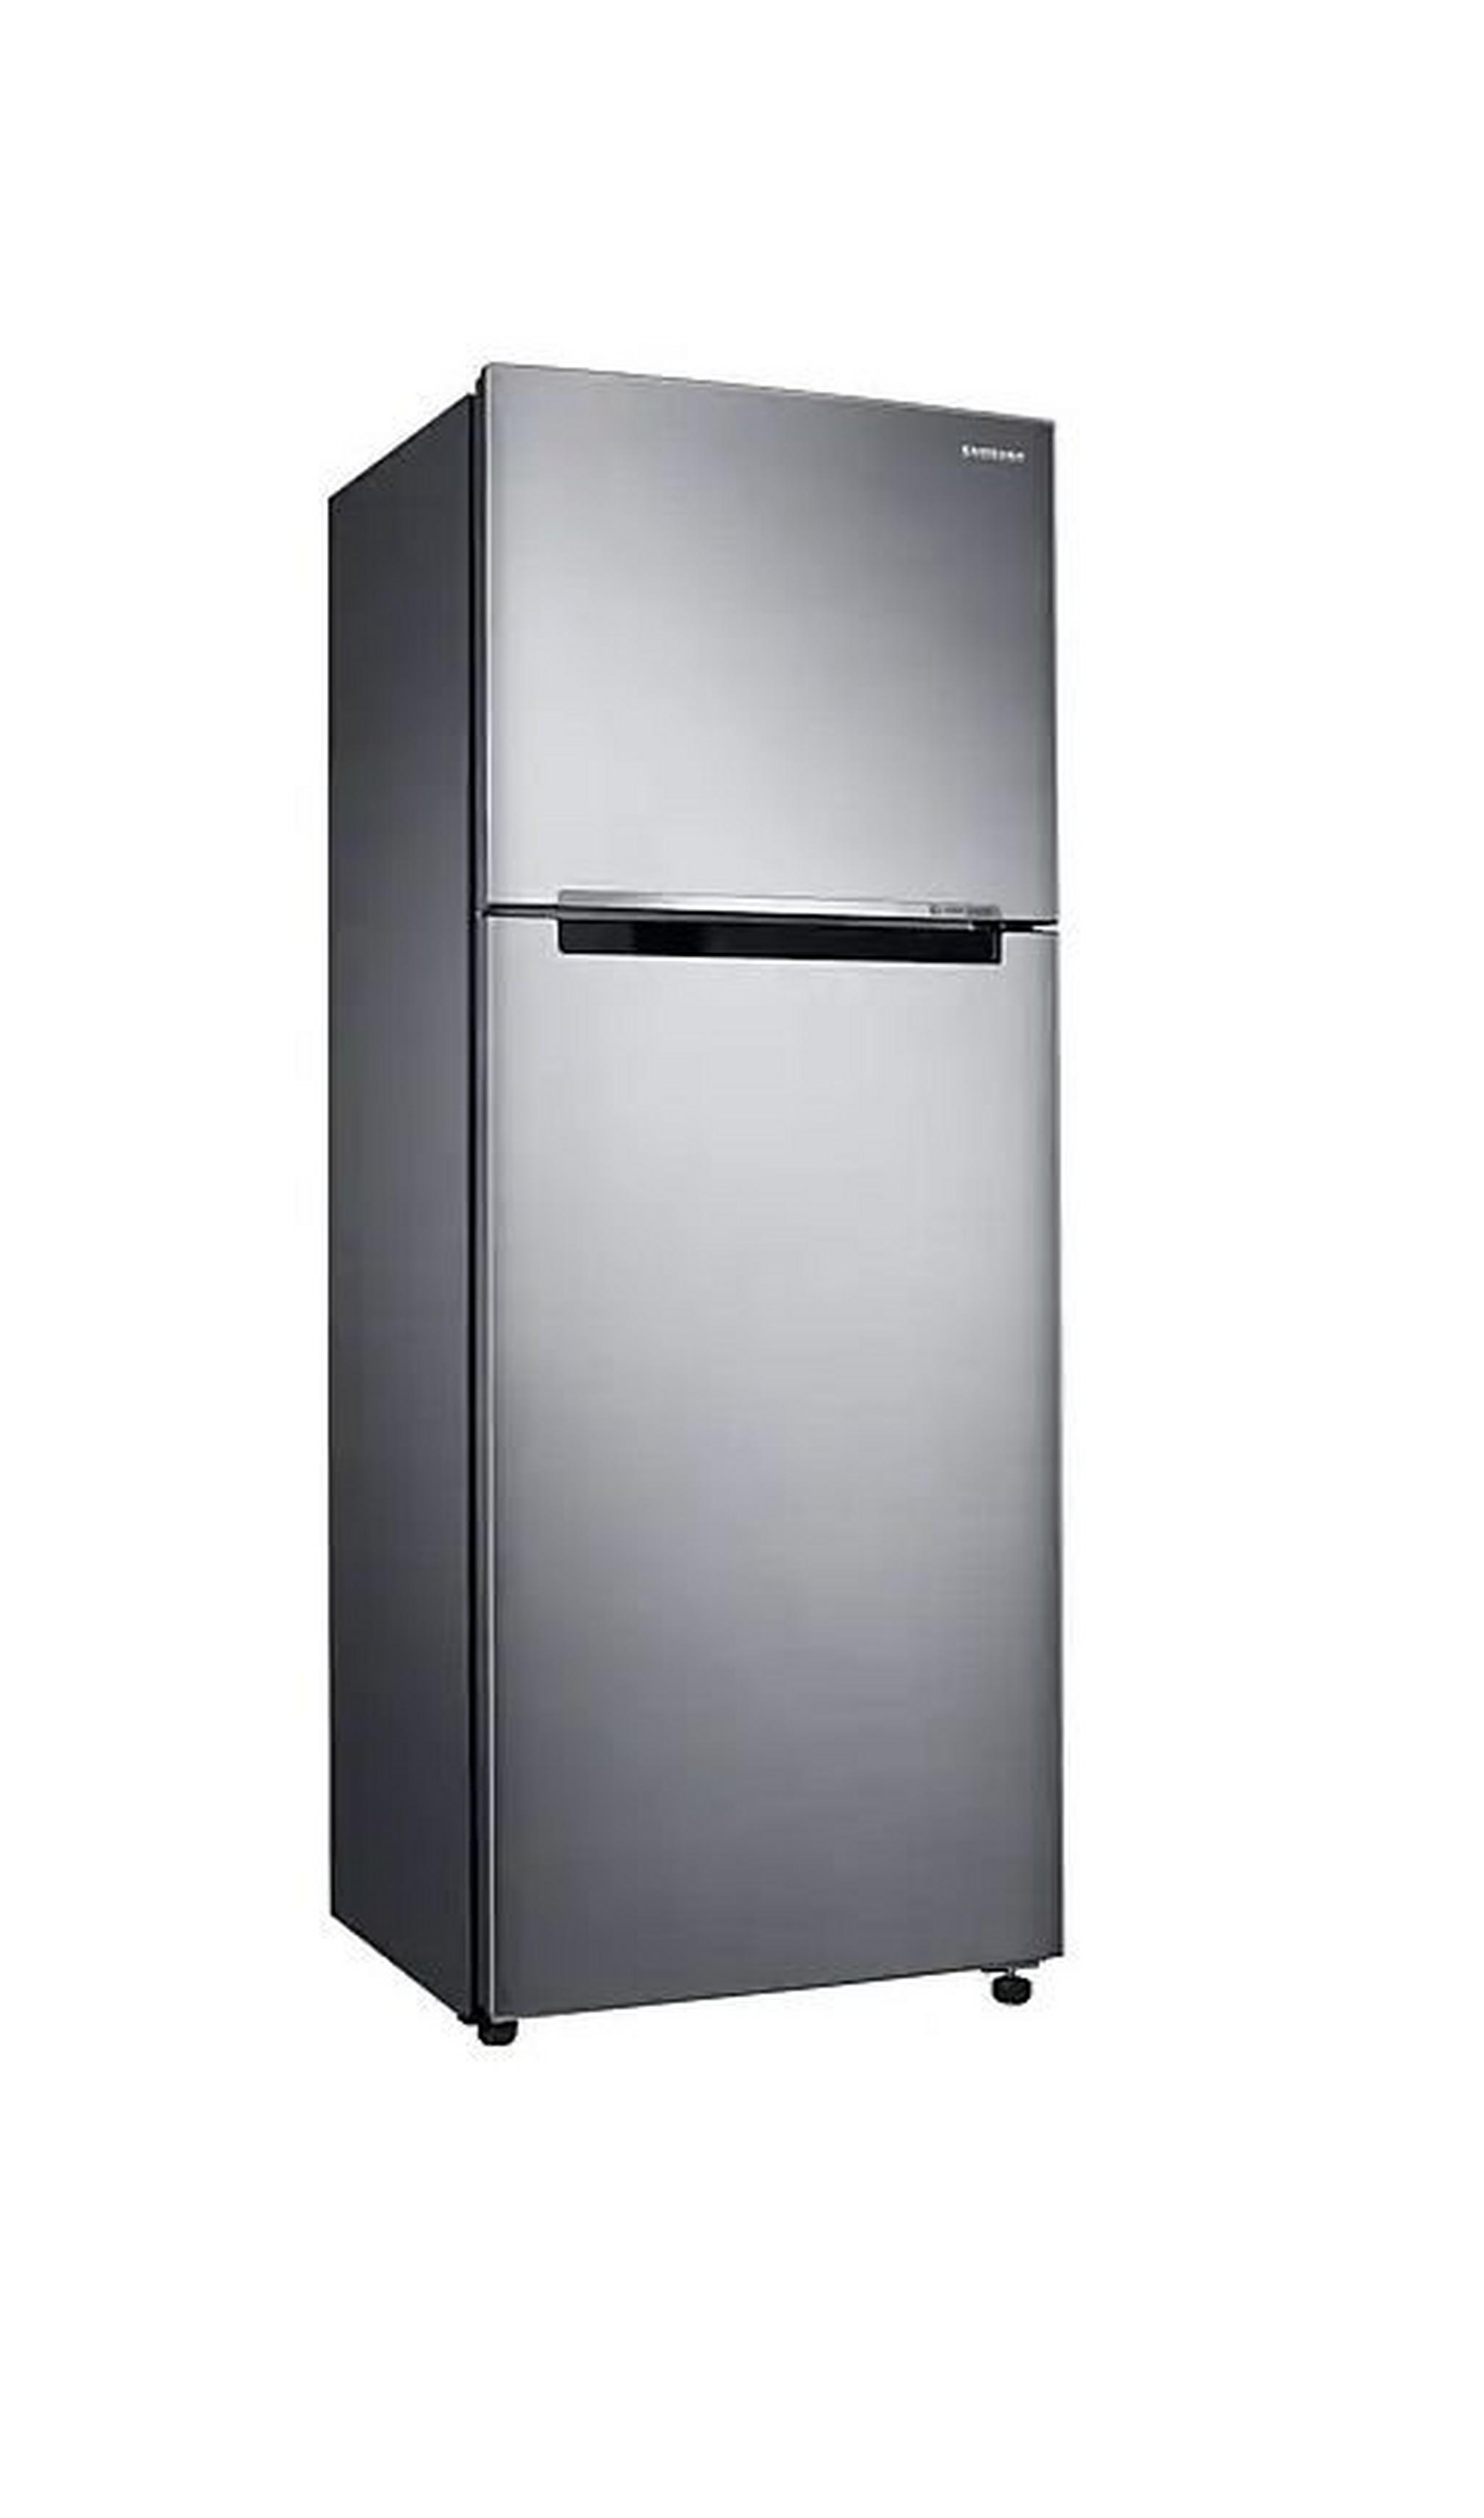 Samsung 18CFT Top Mount Refrigerator (RT50K5030S8) - Inox